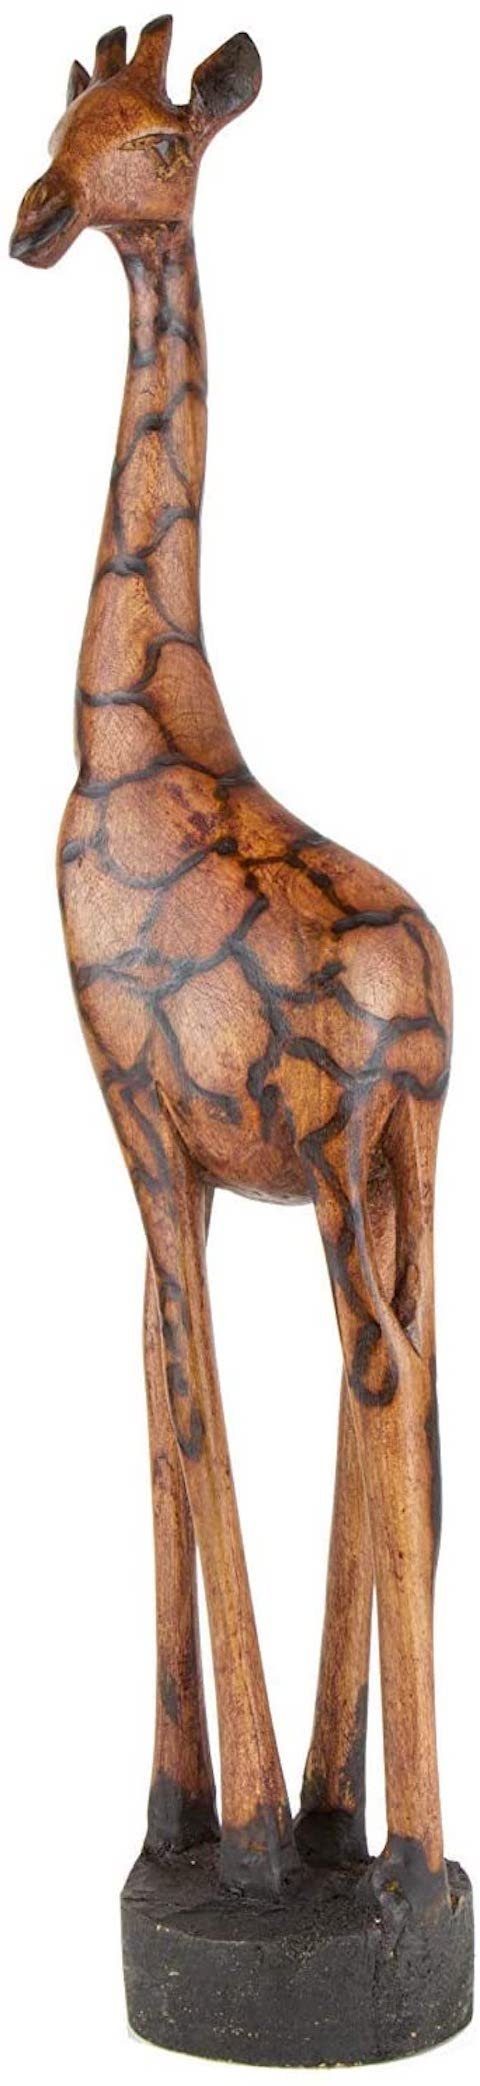 Löwe Gartenfigur Garten Baby Dekoration Afrika Wildtier Figur Statue Skulptur 